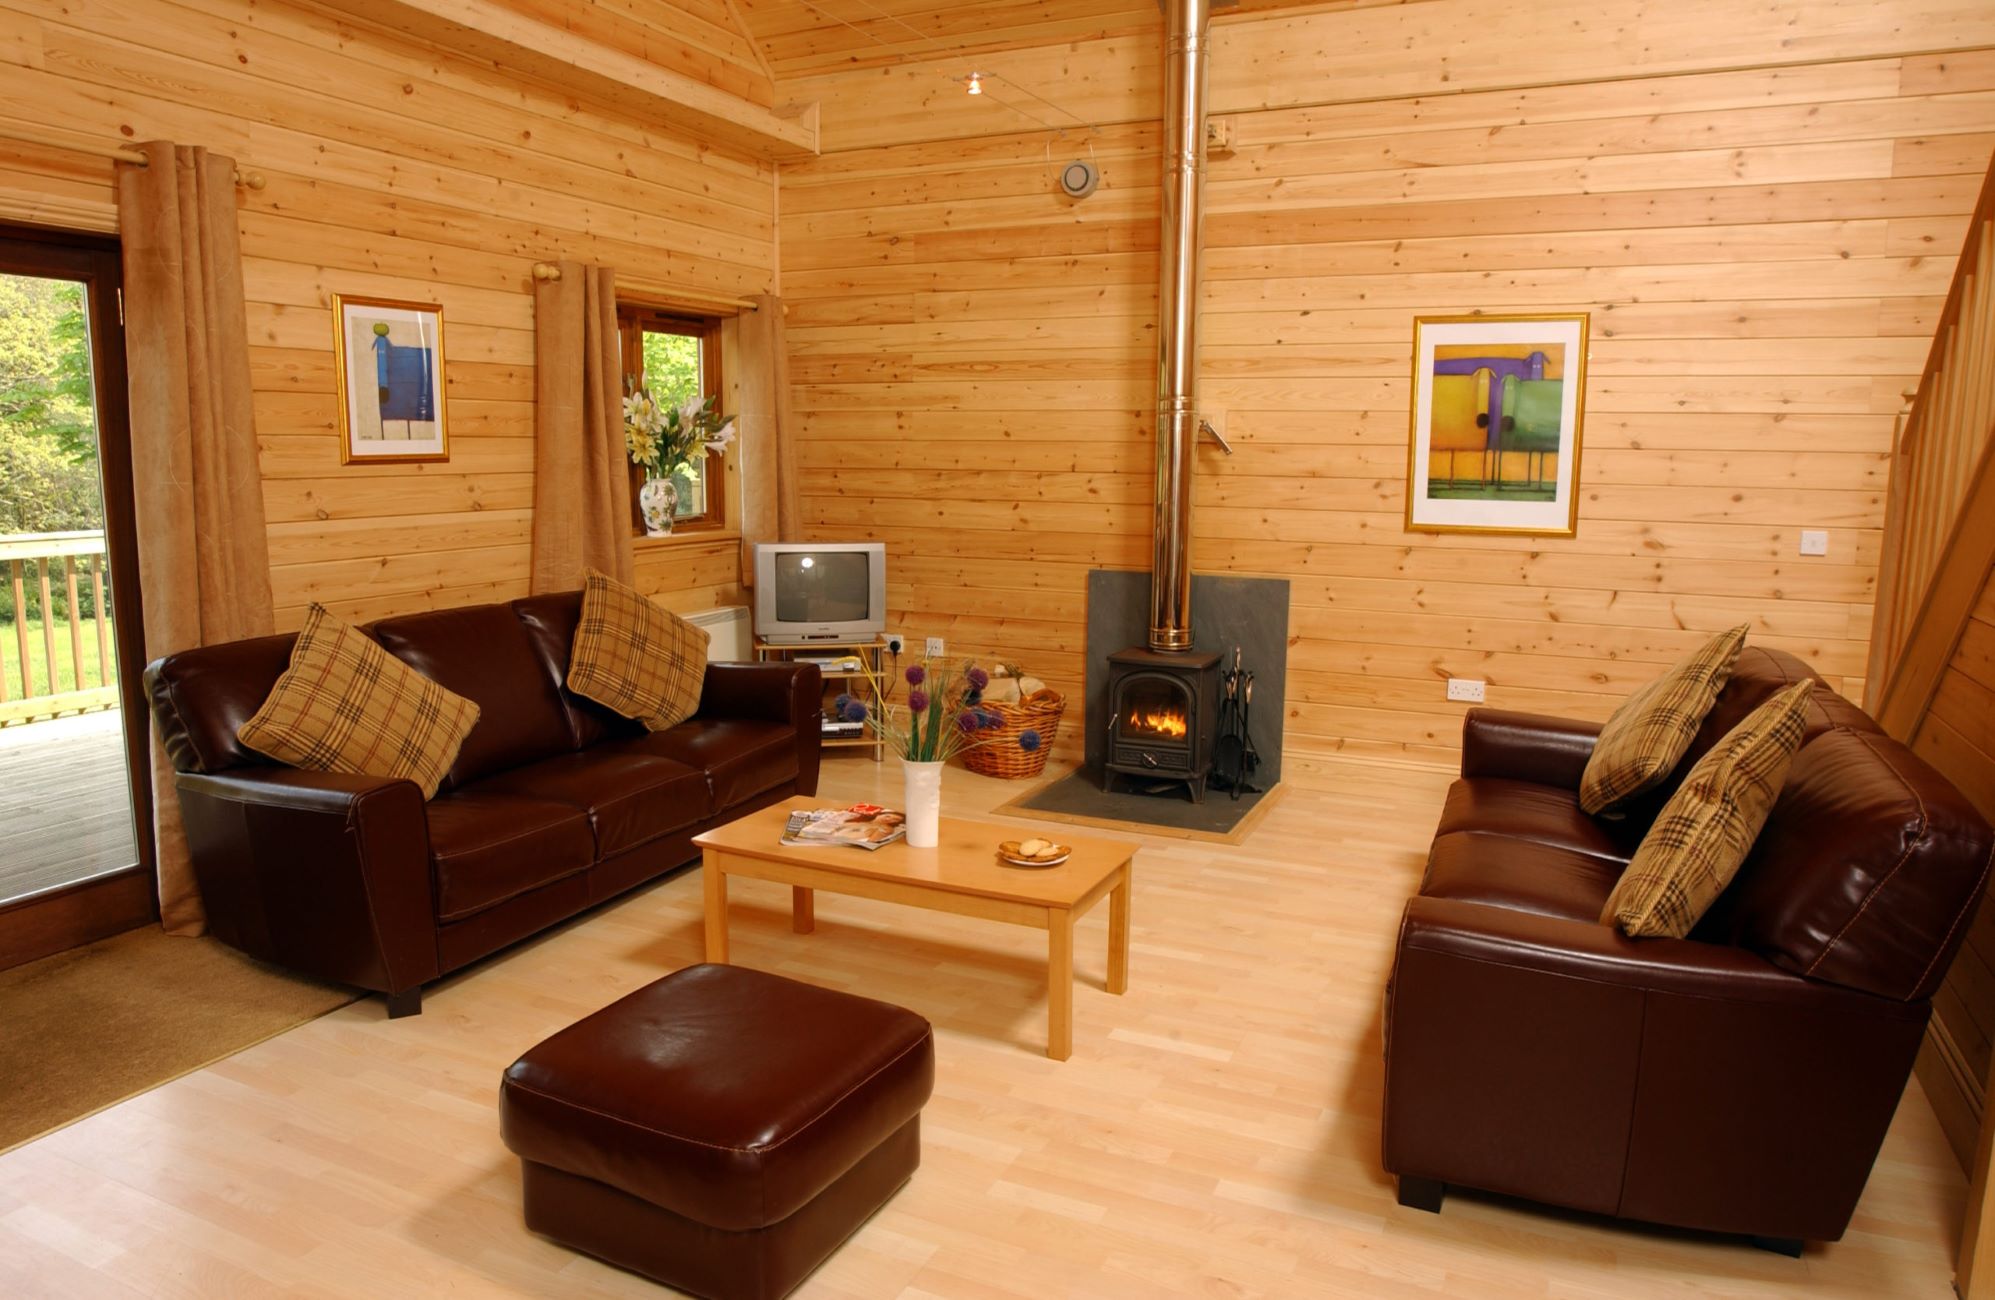 How To Design The Interior Of A Log House